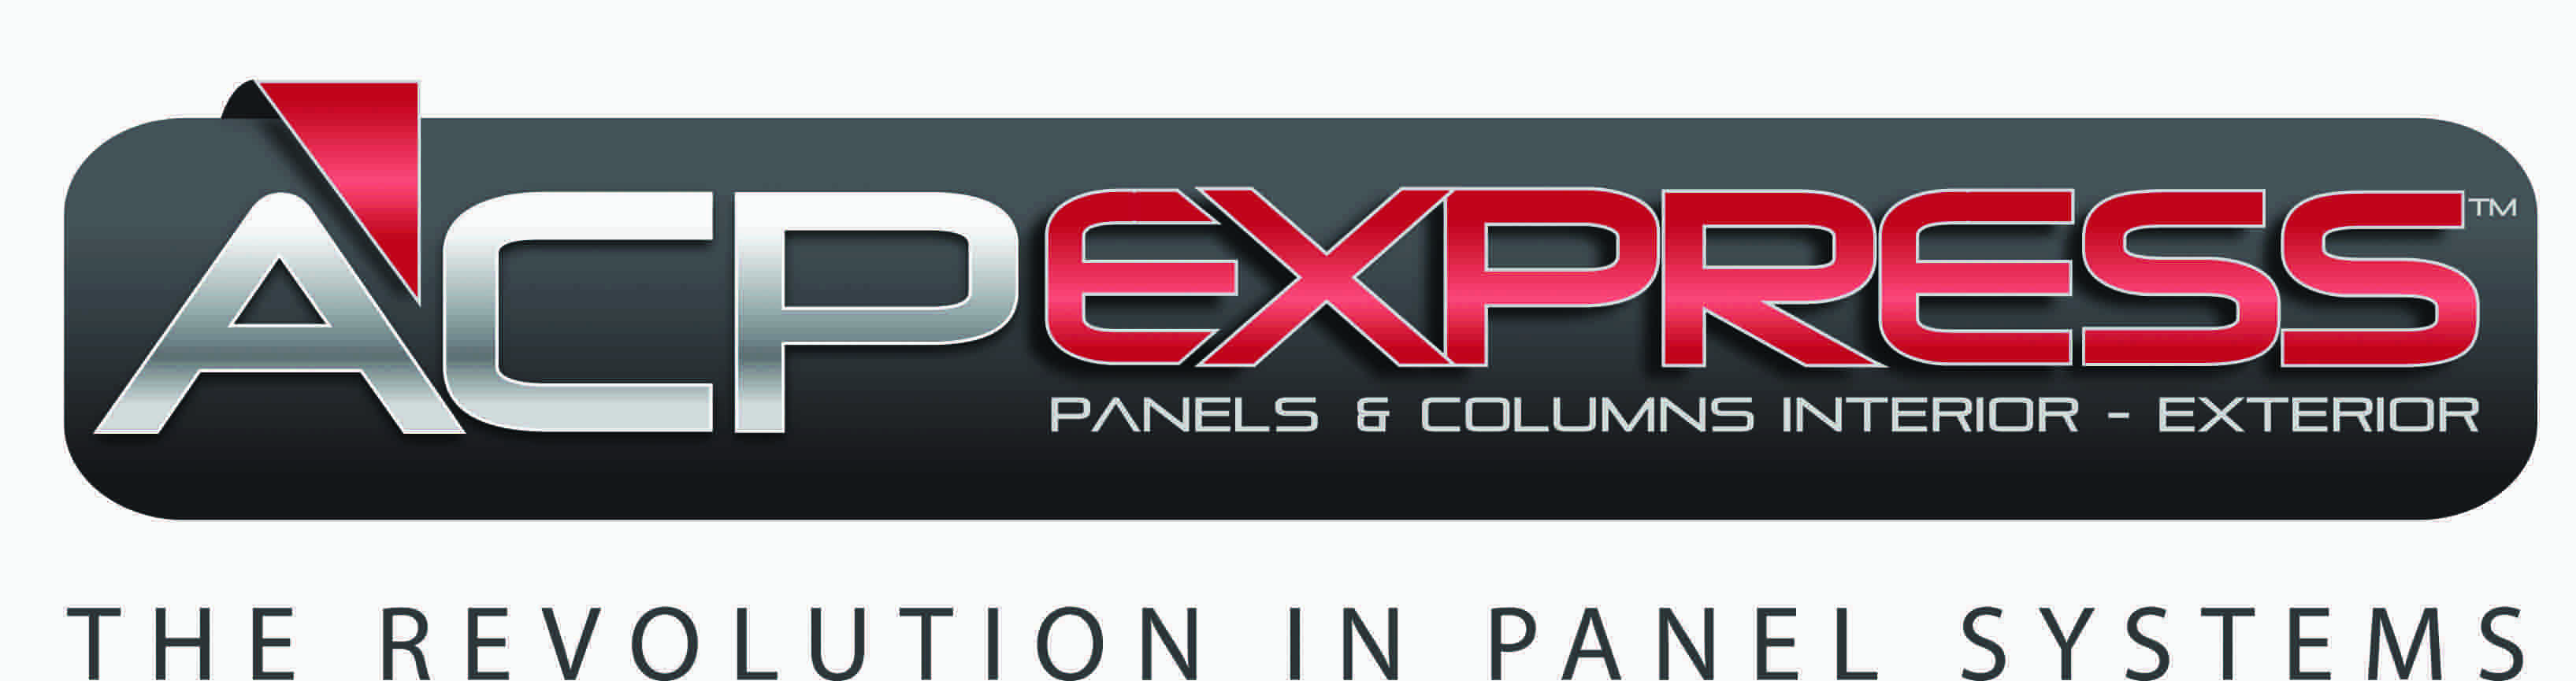 Acpexpress logo.